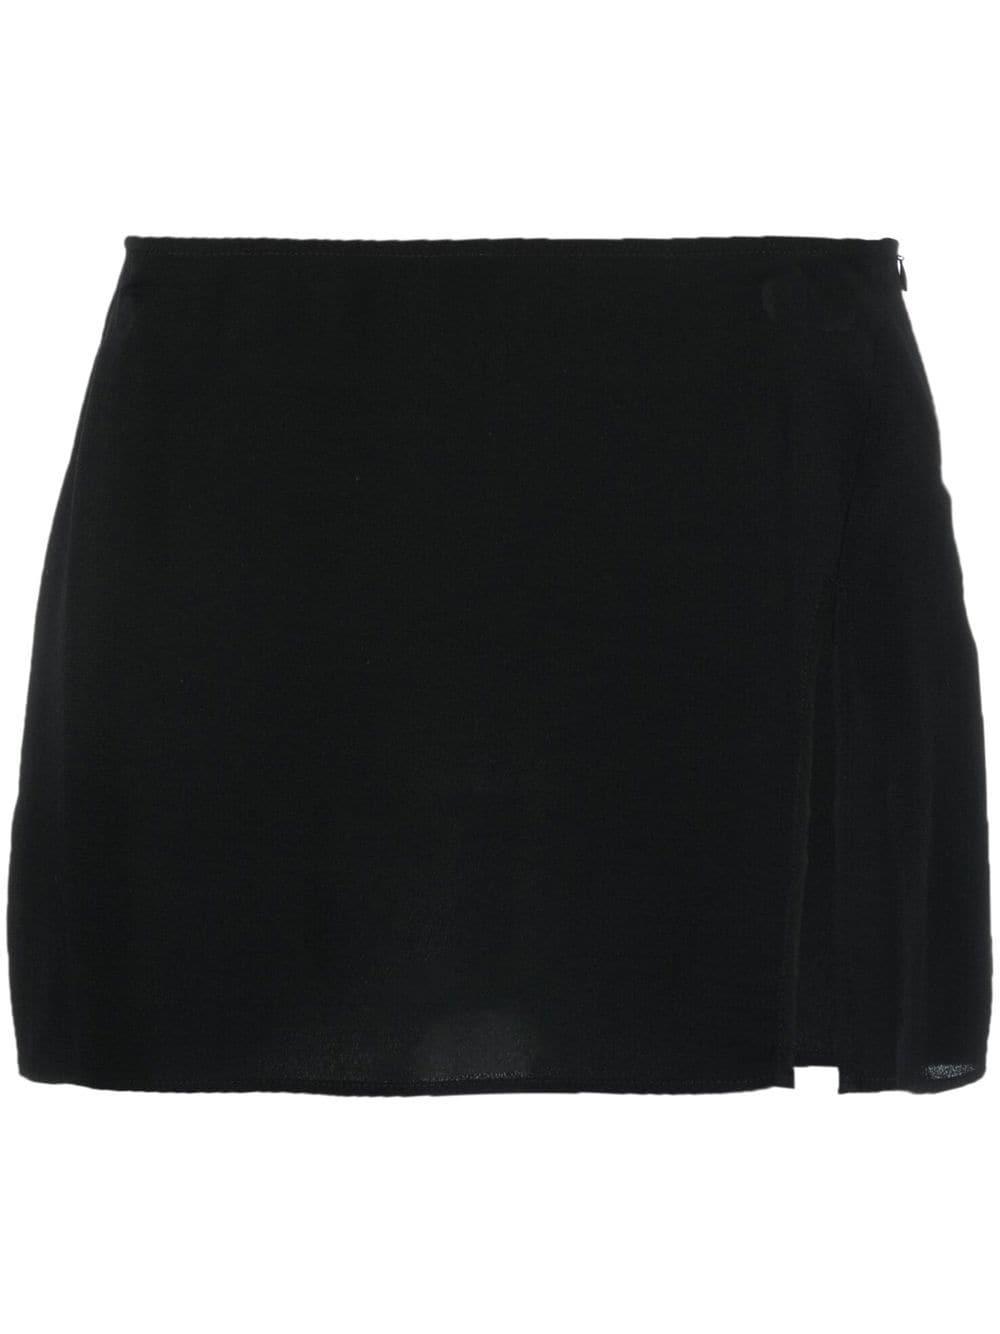 Reformation Kiara Side-slit Mini Skirt in Black | Lyst